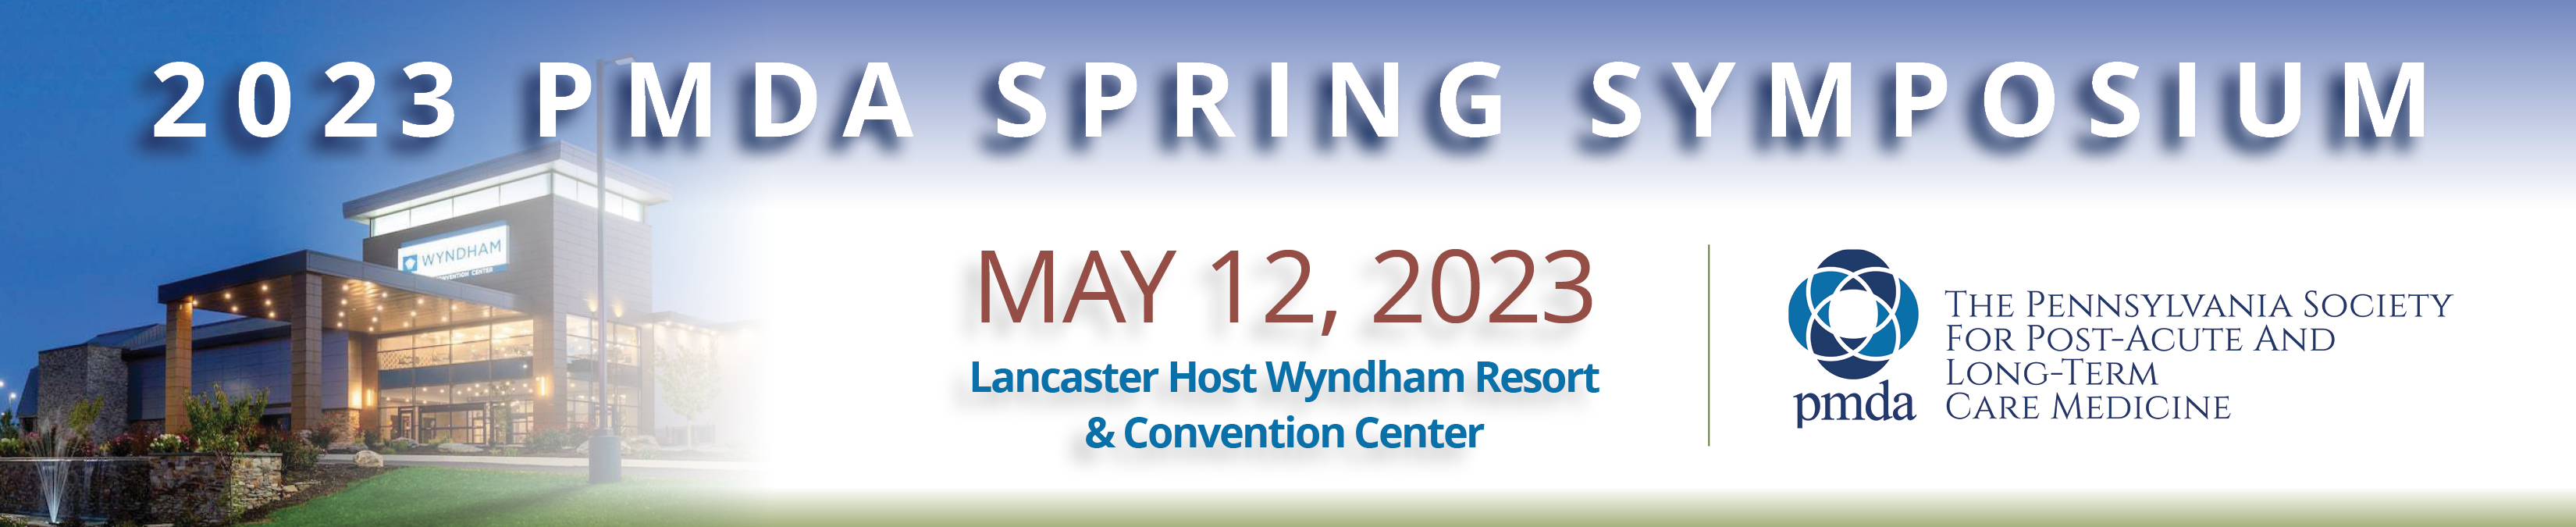 2023 PMDA Spring Symposium